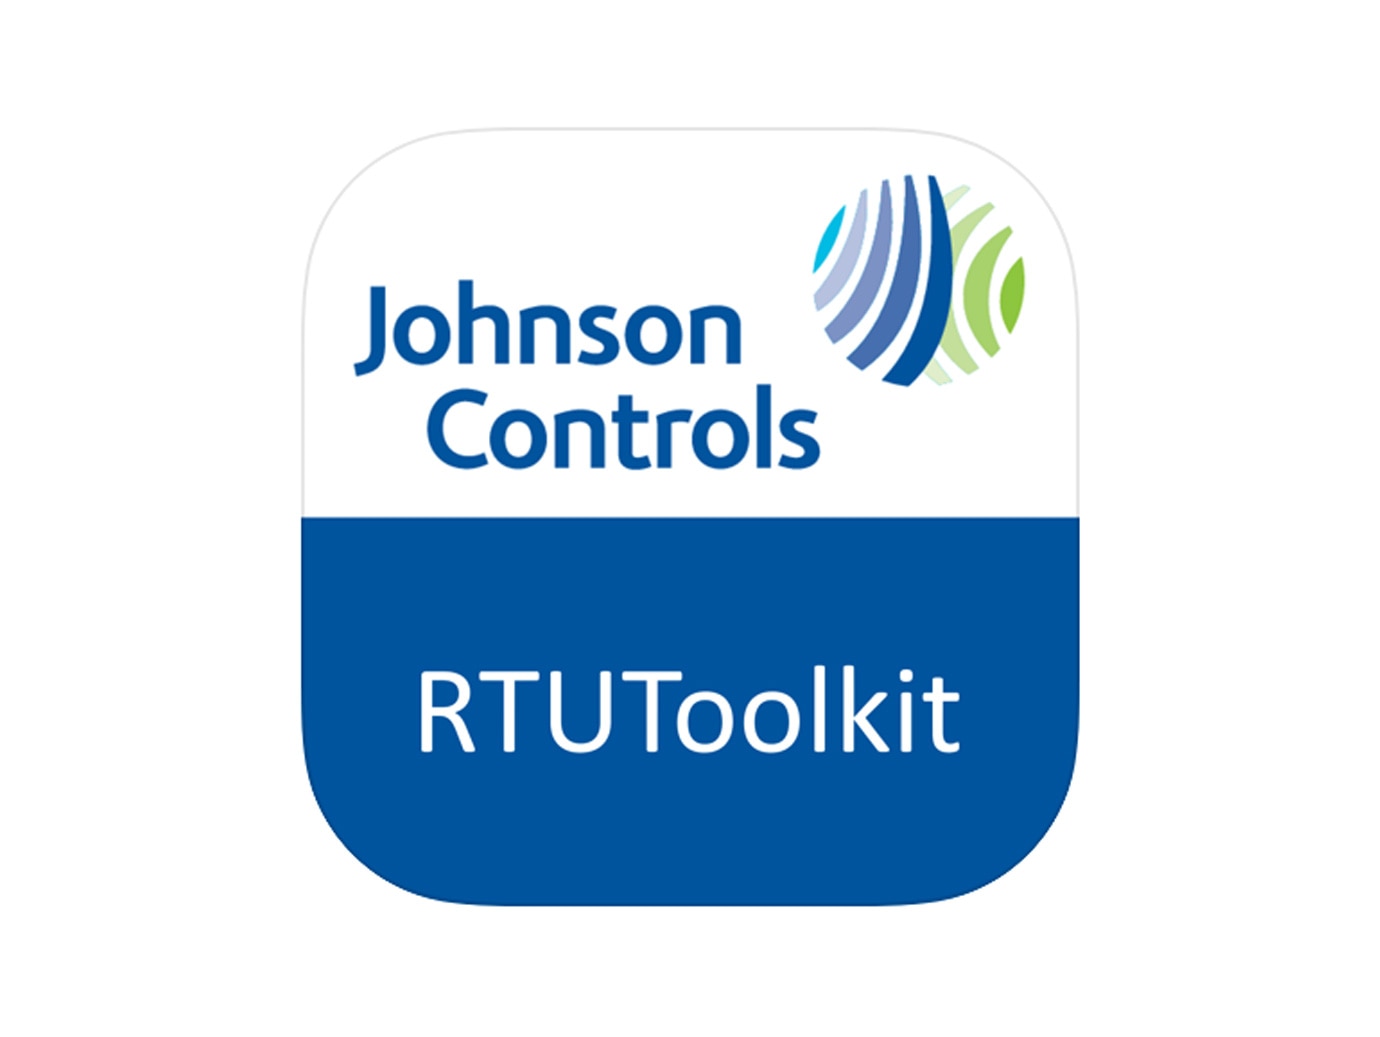 Johnson controls RTU Toolkit logo